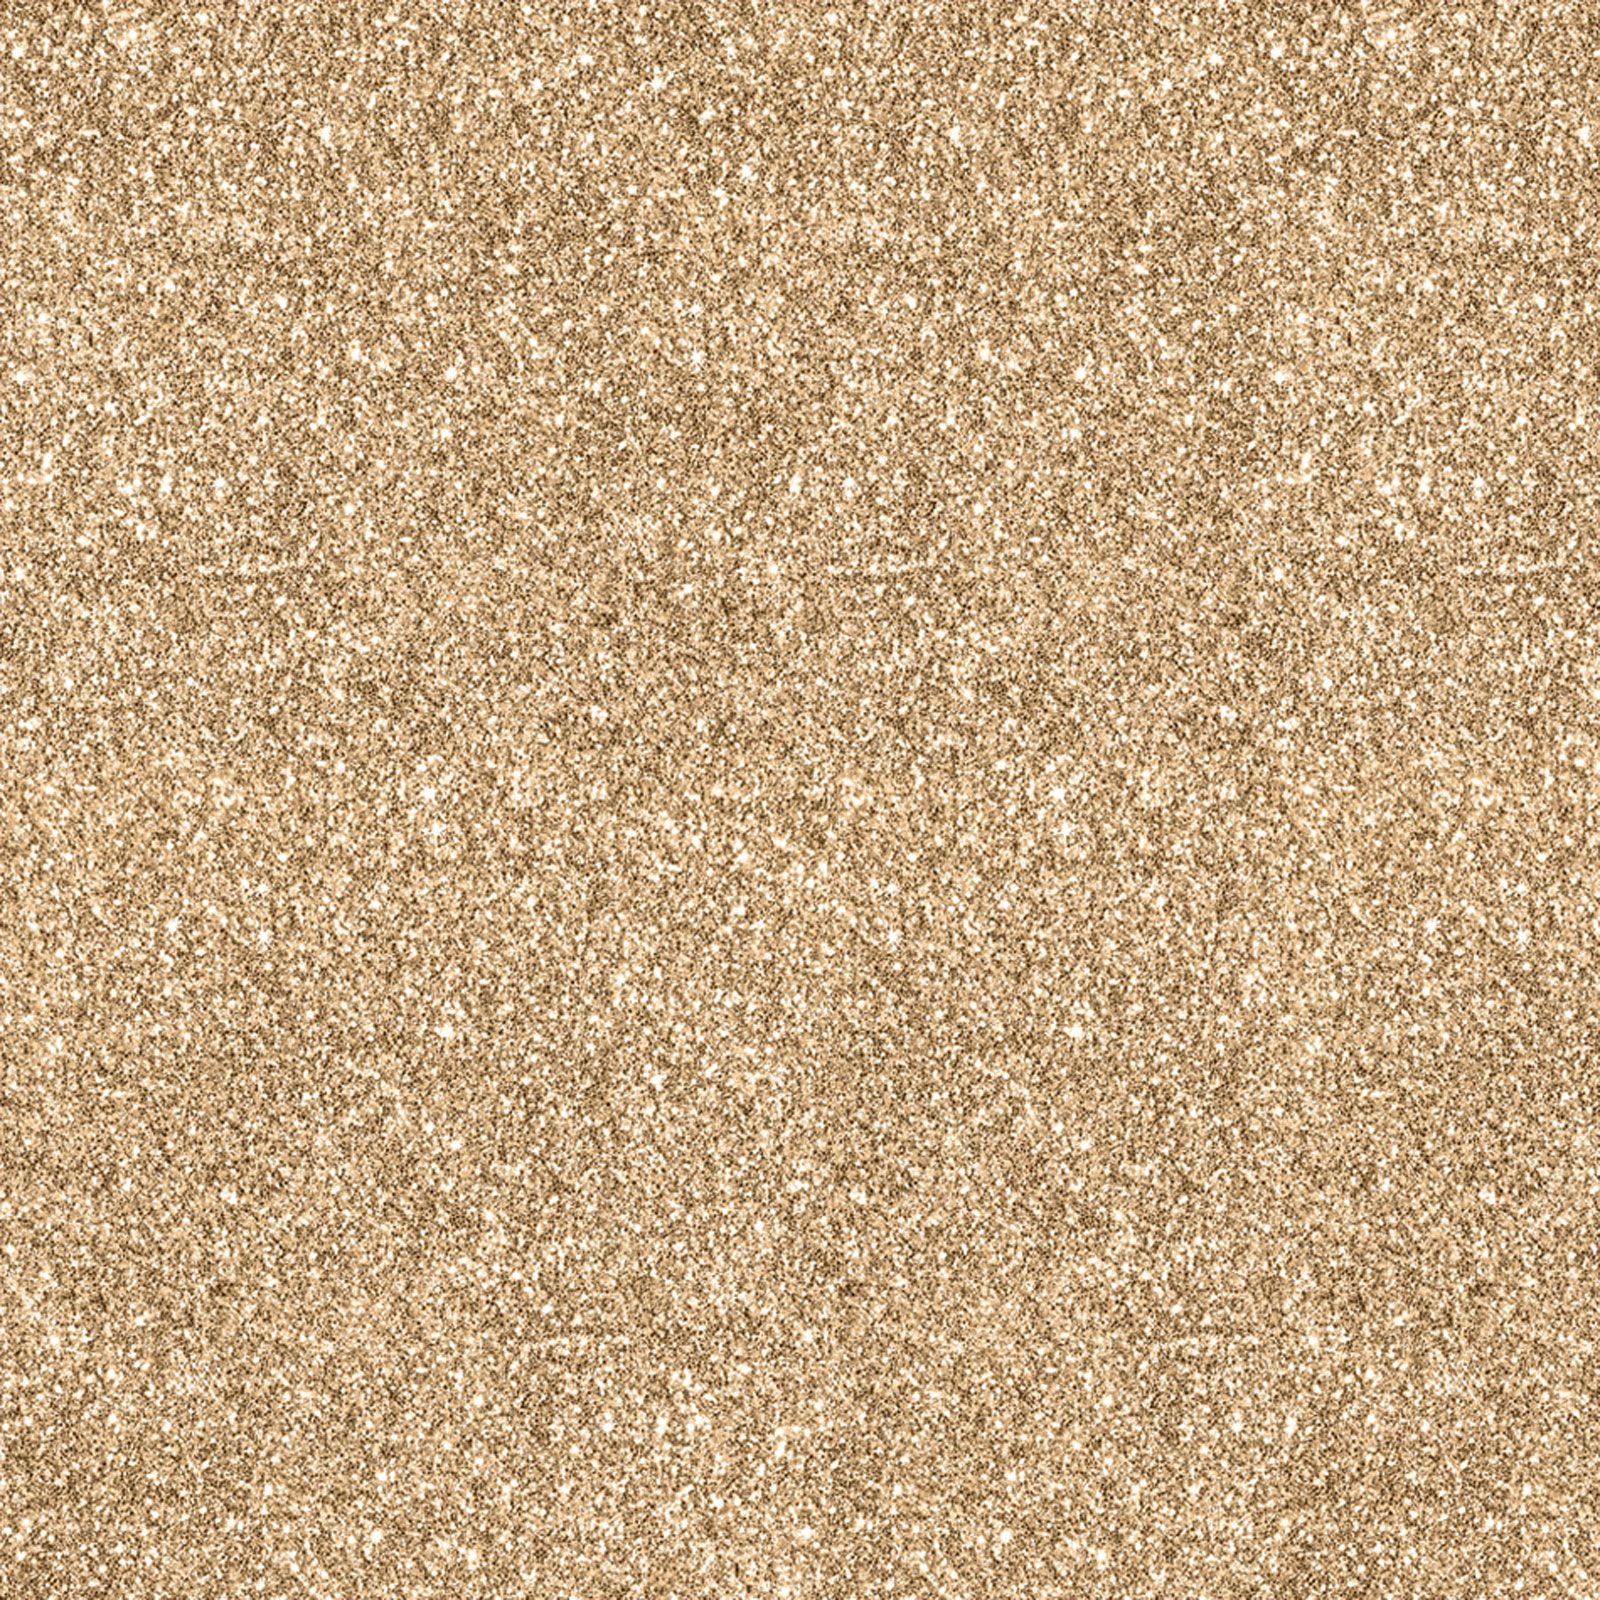 silver glitter wallpaper,brown,beige,sand,flooring,floor